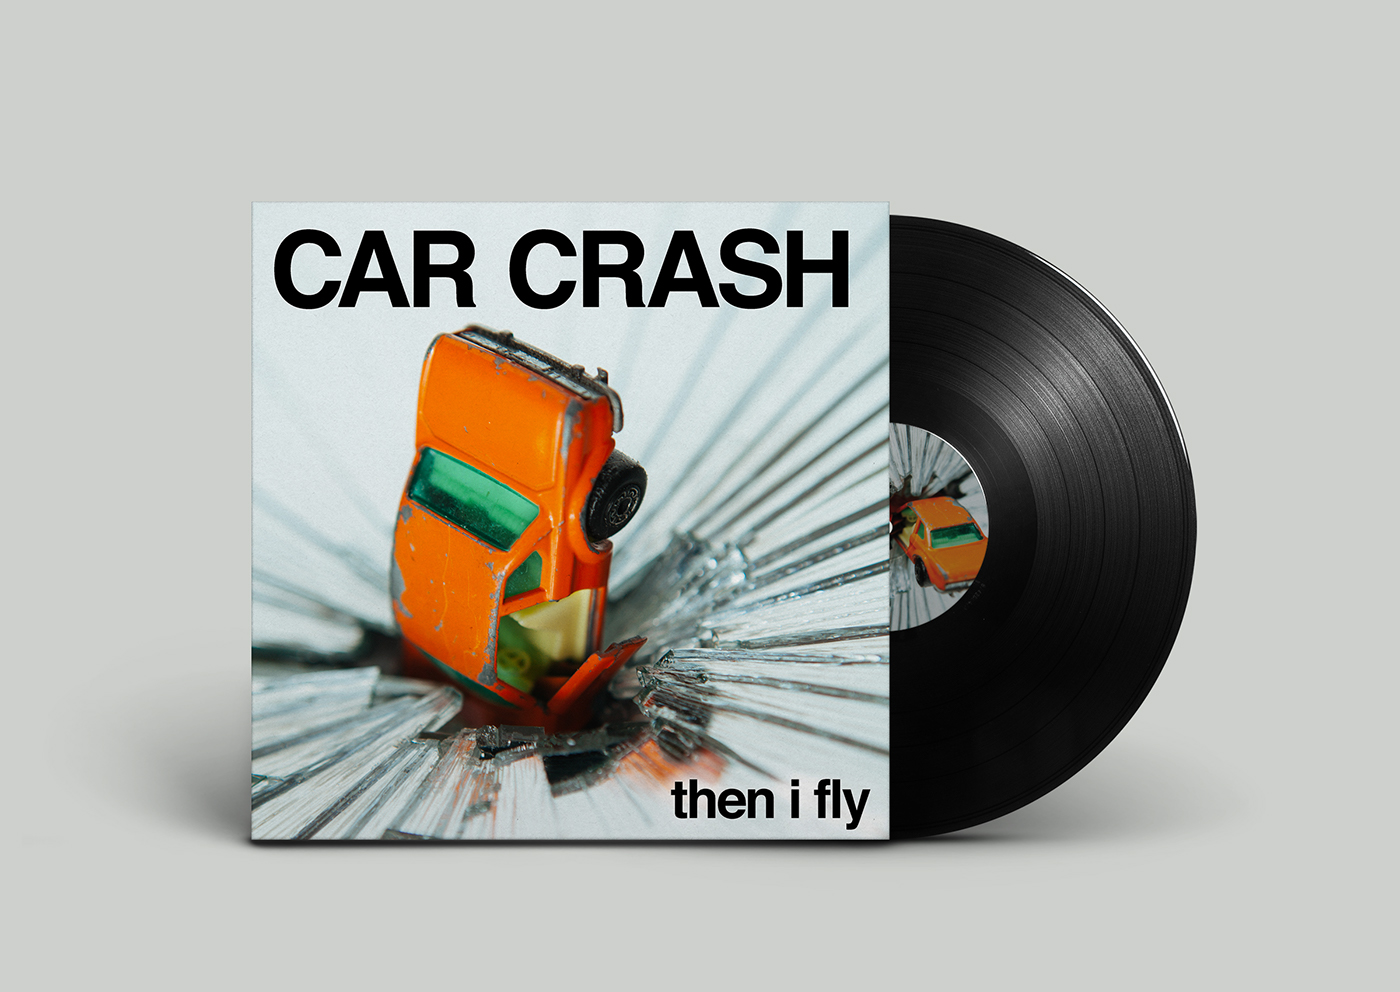 experimental mirror smashing Cars hot rod band Album art concert promo listen orange broken glass close up